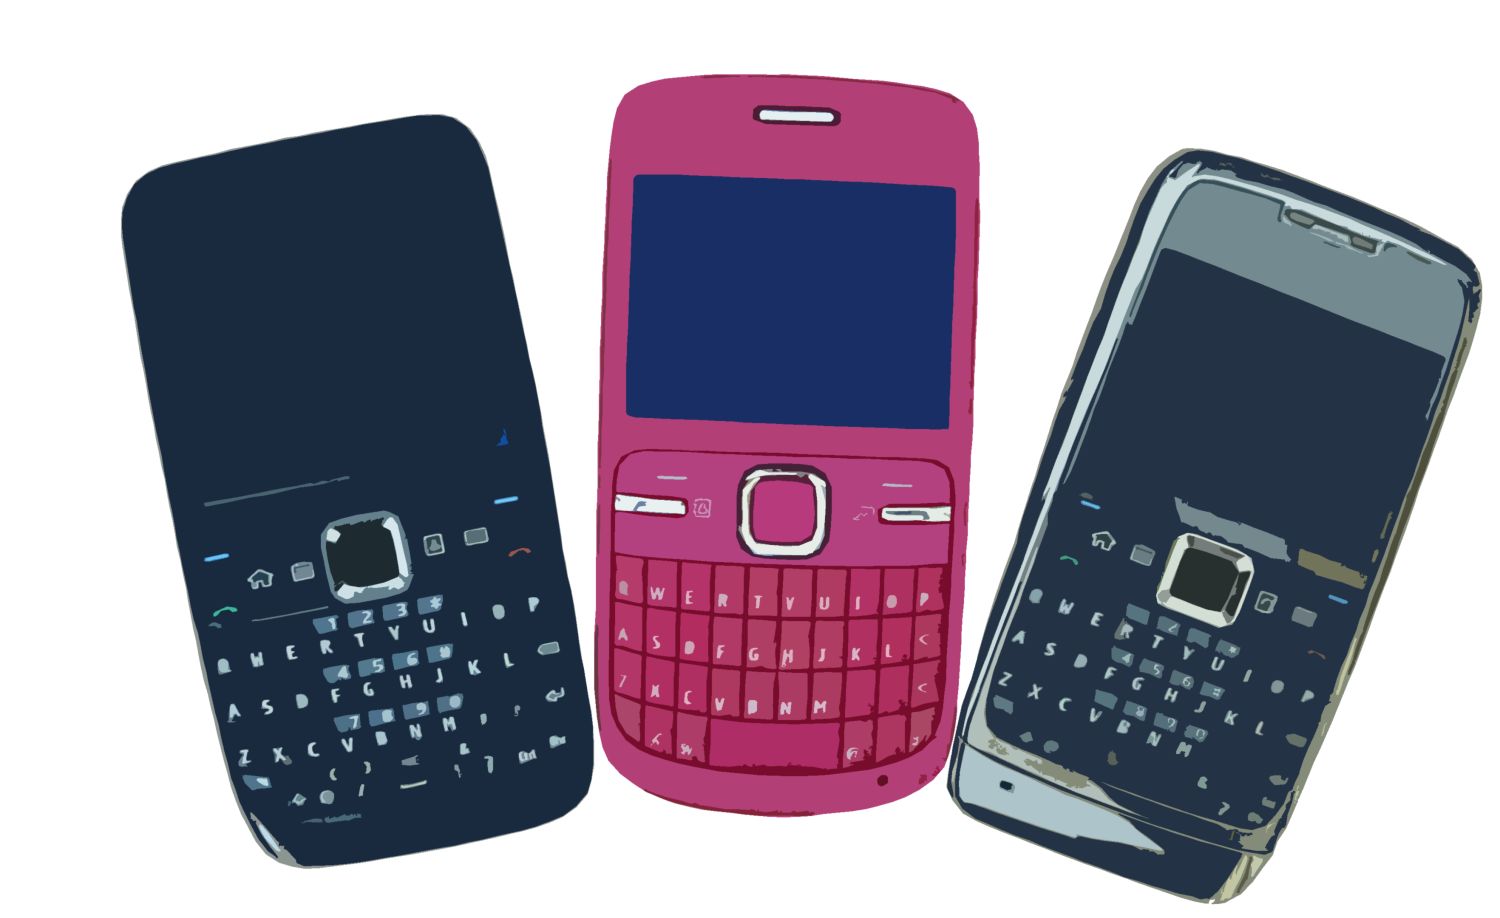 keypad wallpaper,mobile phone,gadget,communication device,feature phone,portable communications device